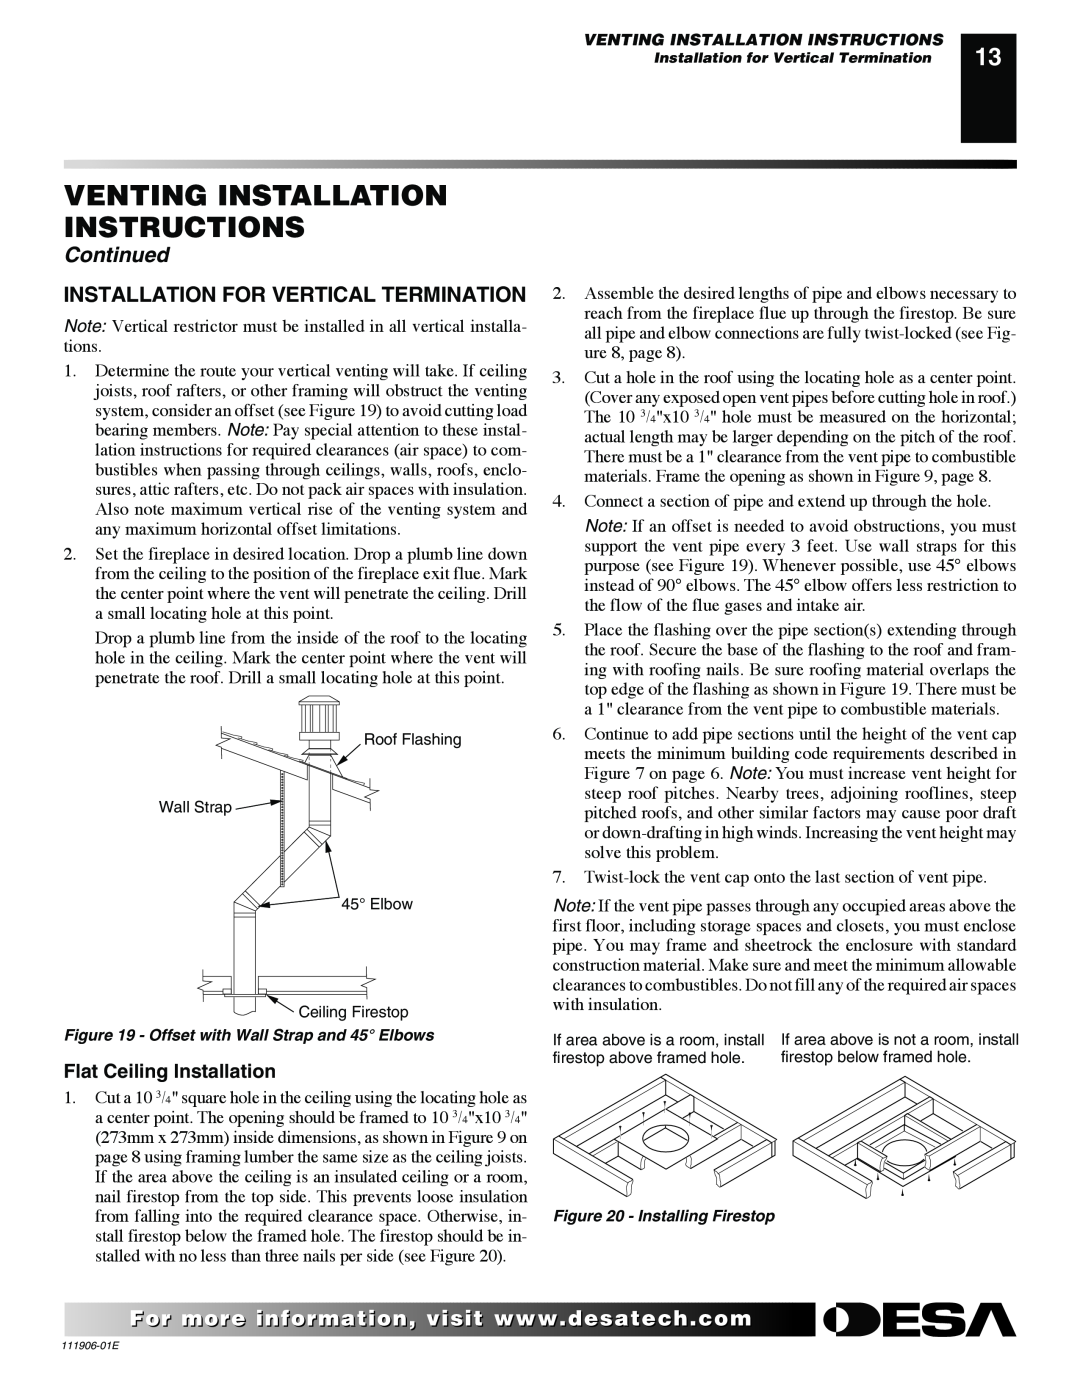 Desa VV42NB(1), CHDV42NR-B, V42P-A Installation For Vertical Termination, Venting Installation Instructions, Continued 